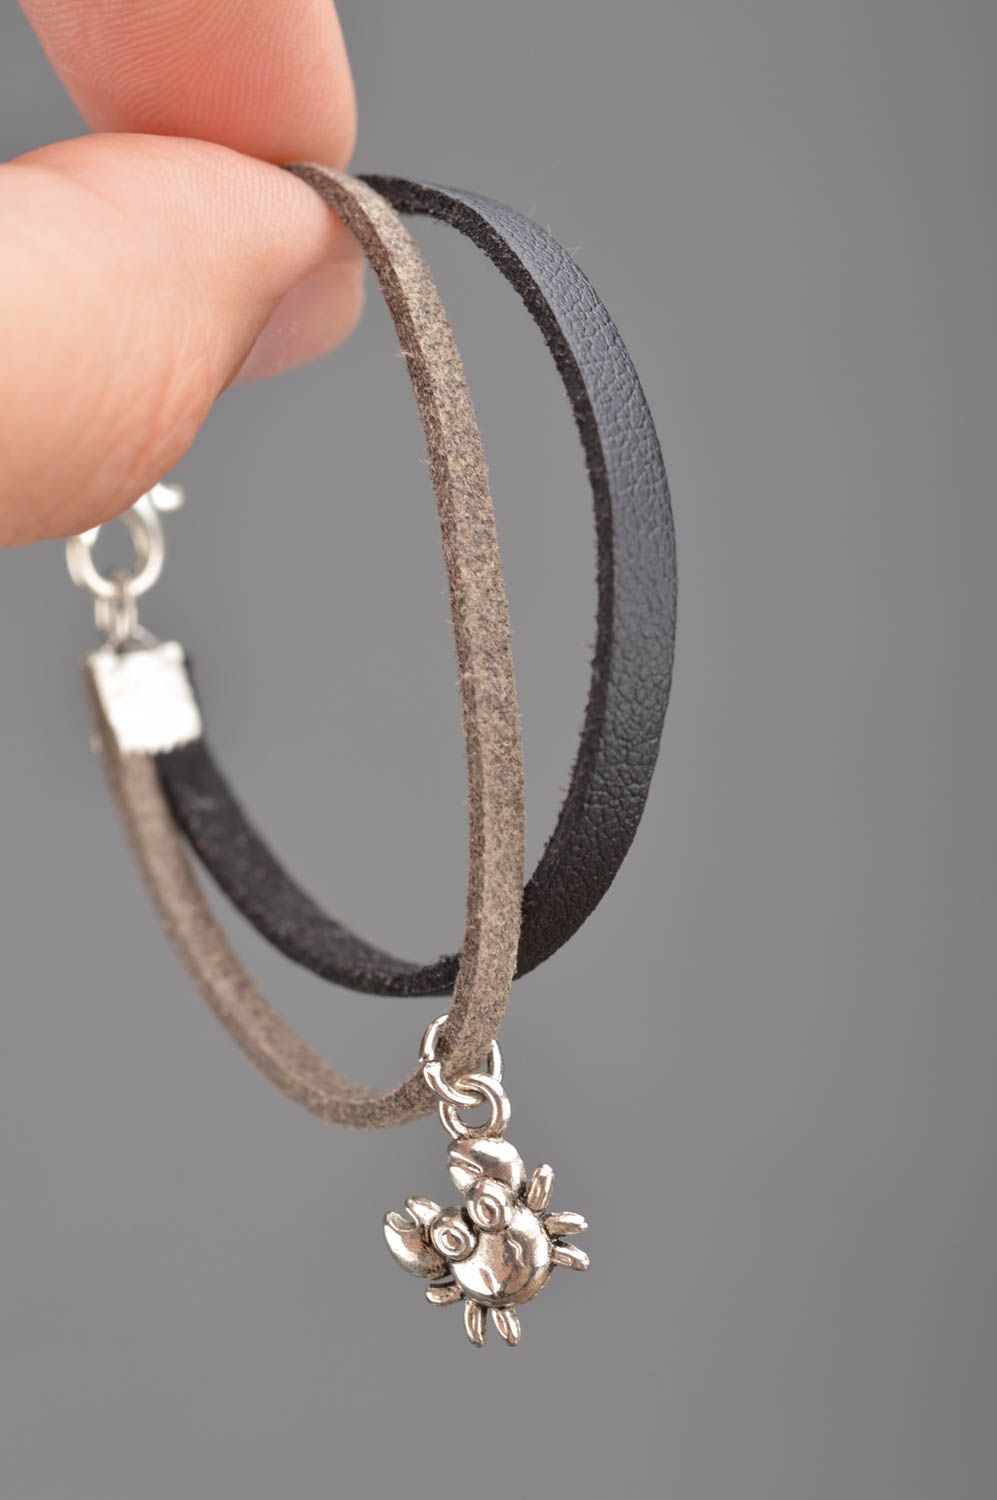 Handmade designer genuine leather cord bracelet black and beige with metal charm photo 5